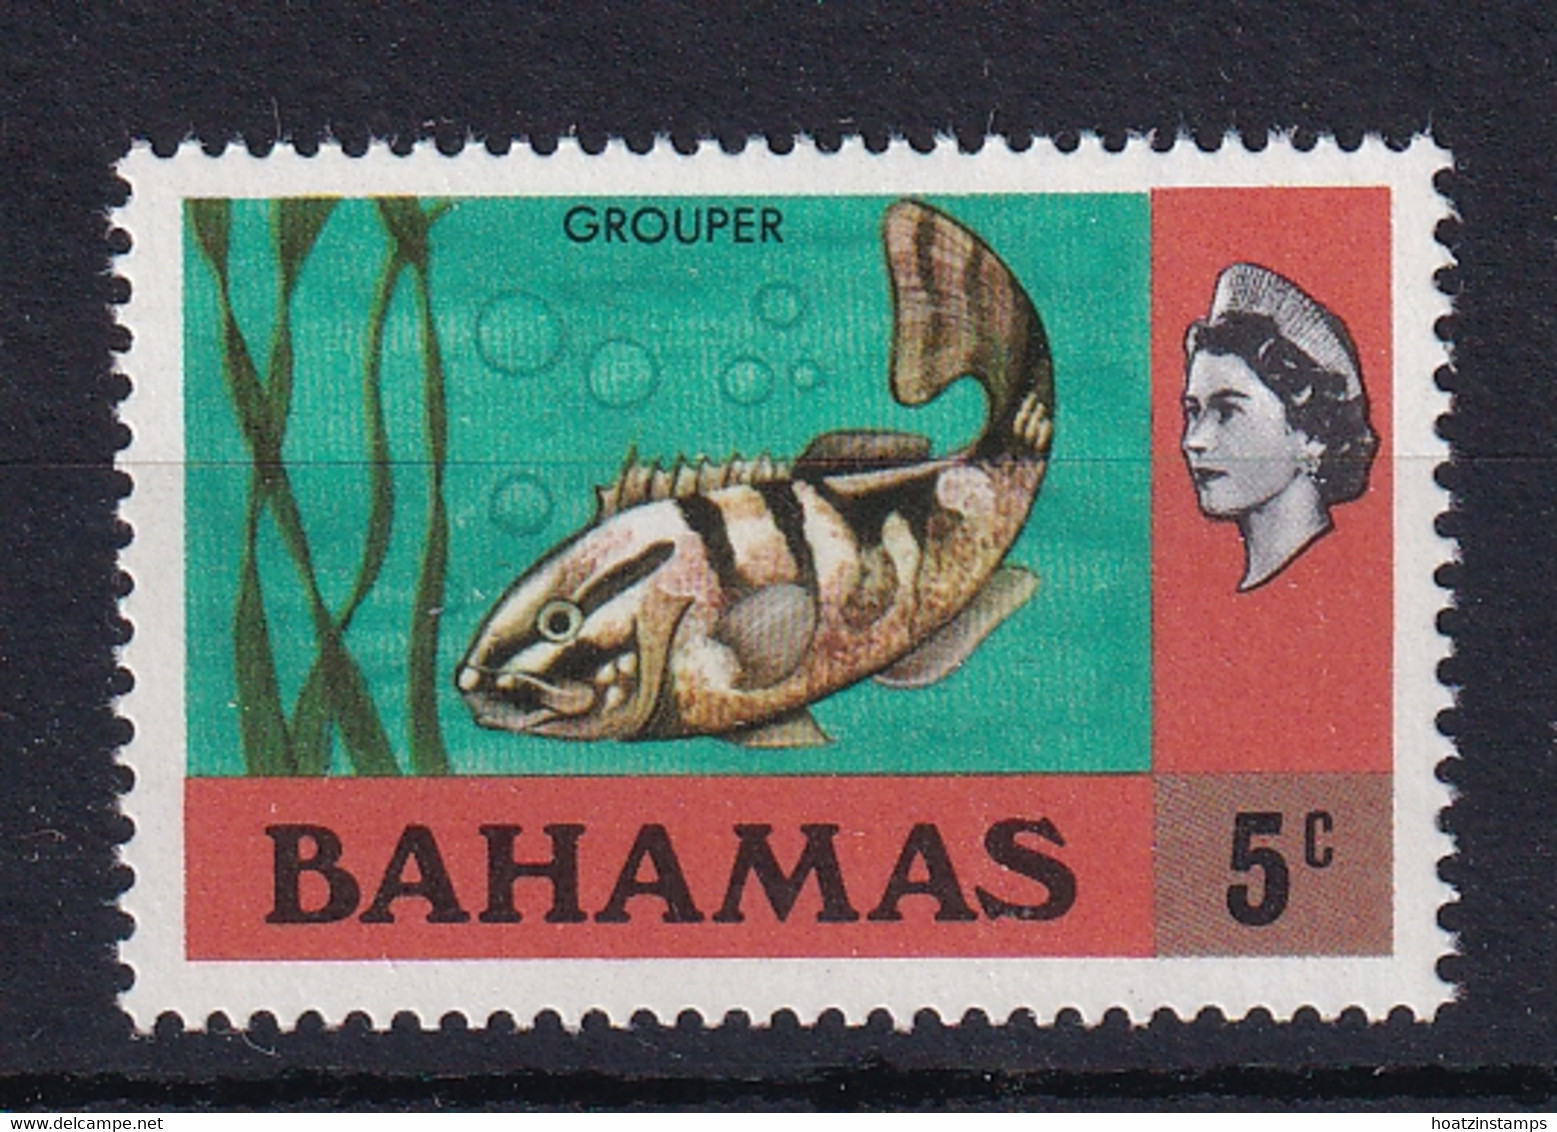 Bahamas: 1972/73   Pictorial   SG395    5c   [Wmk Sideways]  MNH - 1963-1973 Autonomía Interna